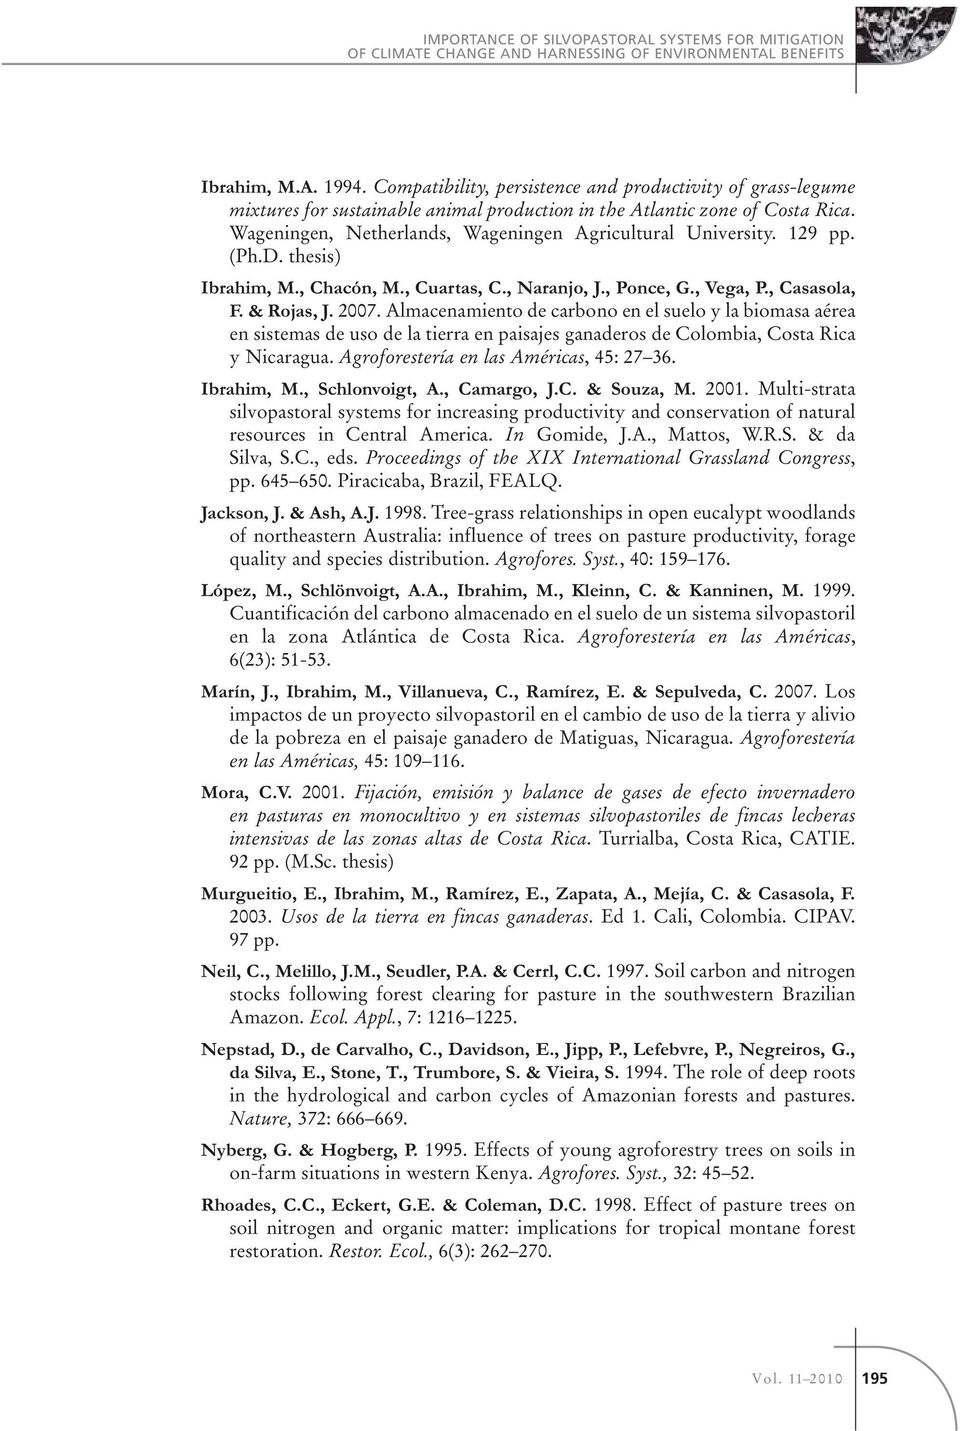 129 pp. (Ph.D. thesis) Ibrahim, M., Chacón, M., Cuartas, C., Naranjo, J., Ponce, G., Vega, P., Casasola, F. & Rojas, J. 2007.